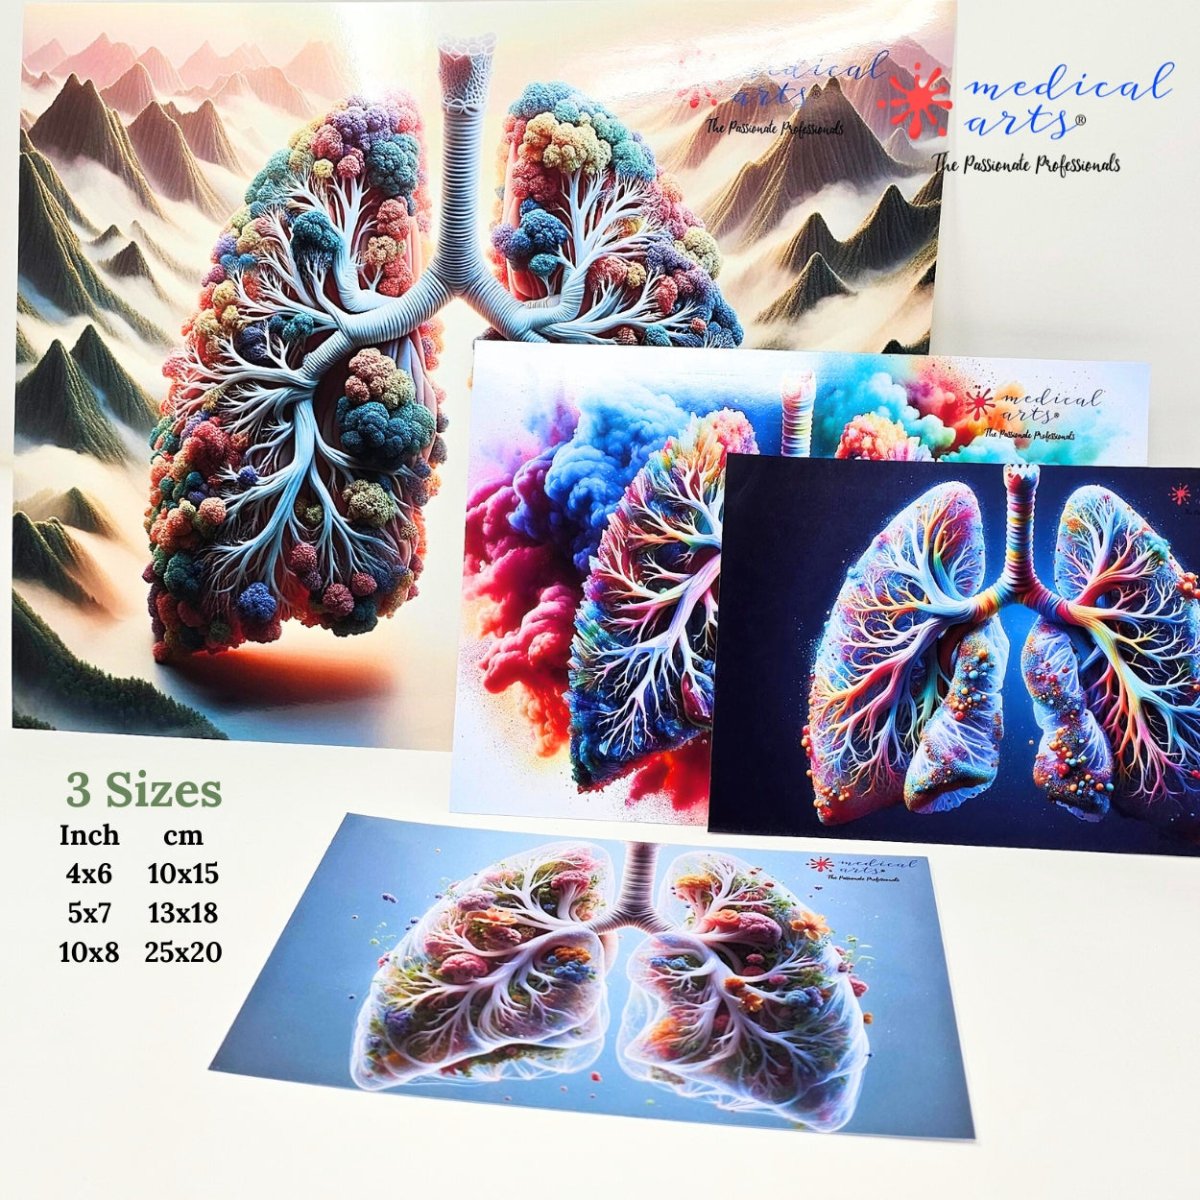 Medical Arts Gallery || Artistic Fine Art || Lungs Posters, Prints, & Visual Artwork Medical Arts Shop